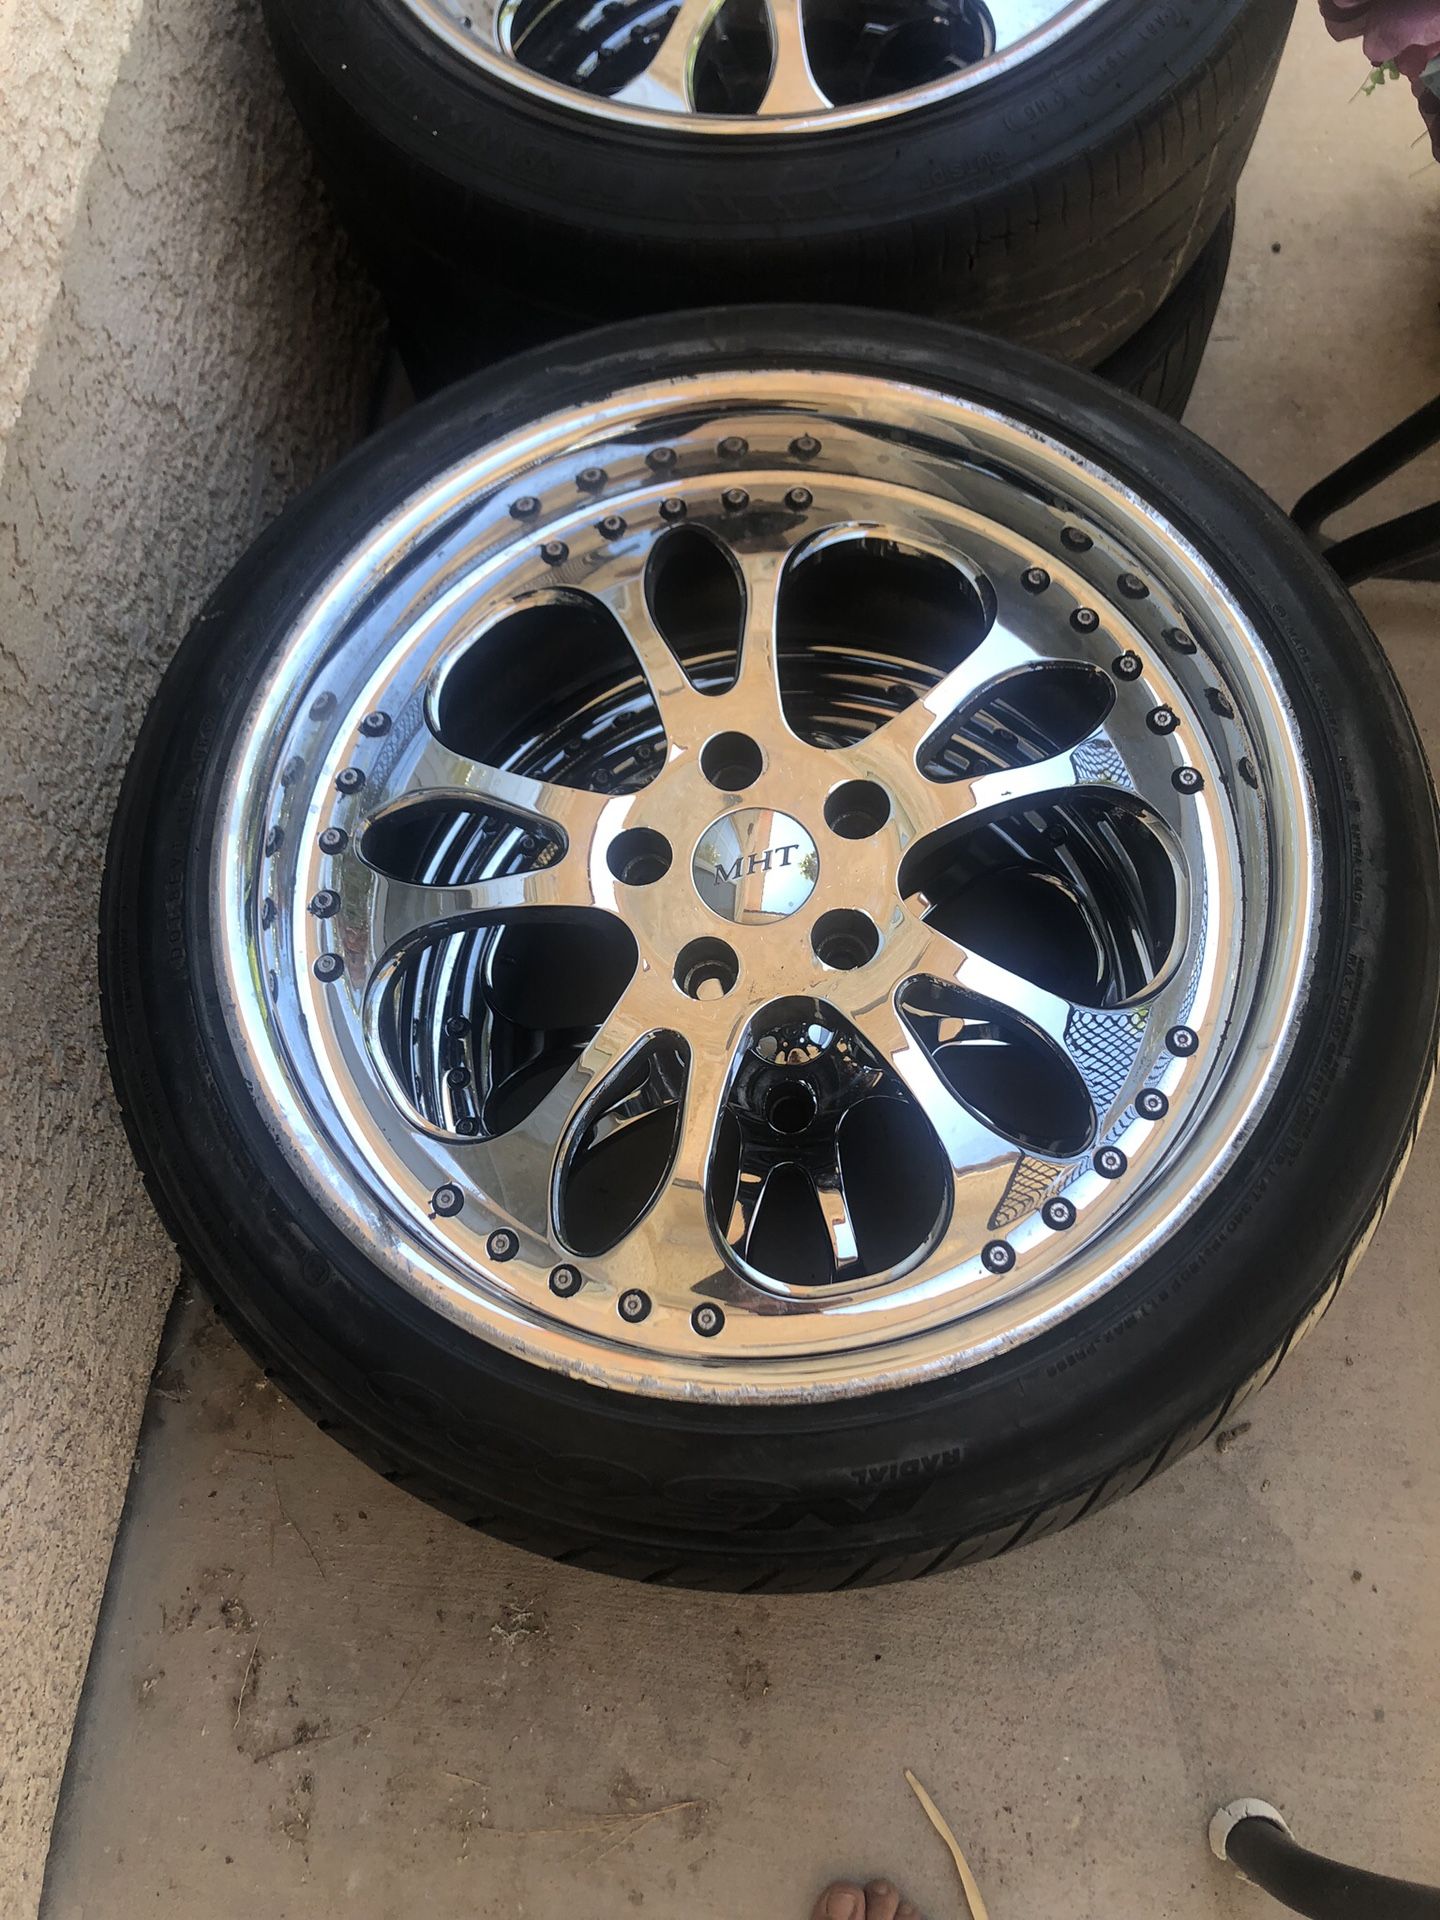 MHT “Luxury” Chrome Rims for sale !! Super clean (Needs new tires)